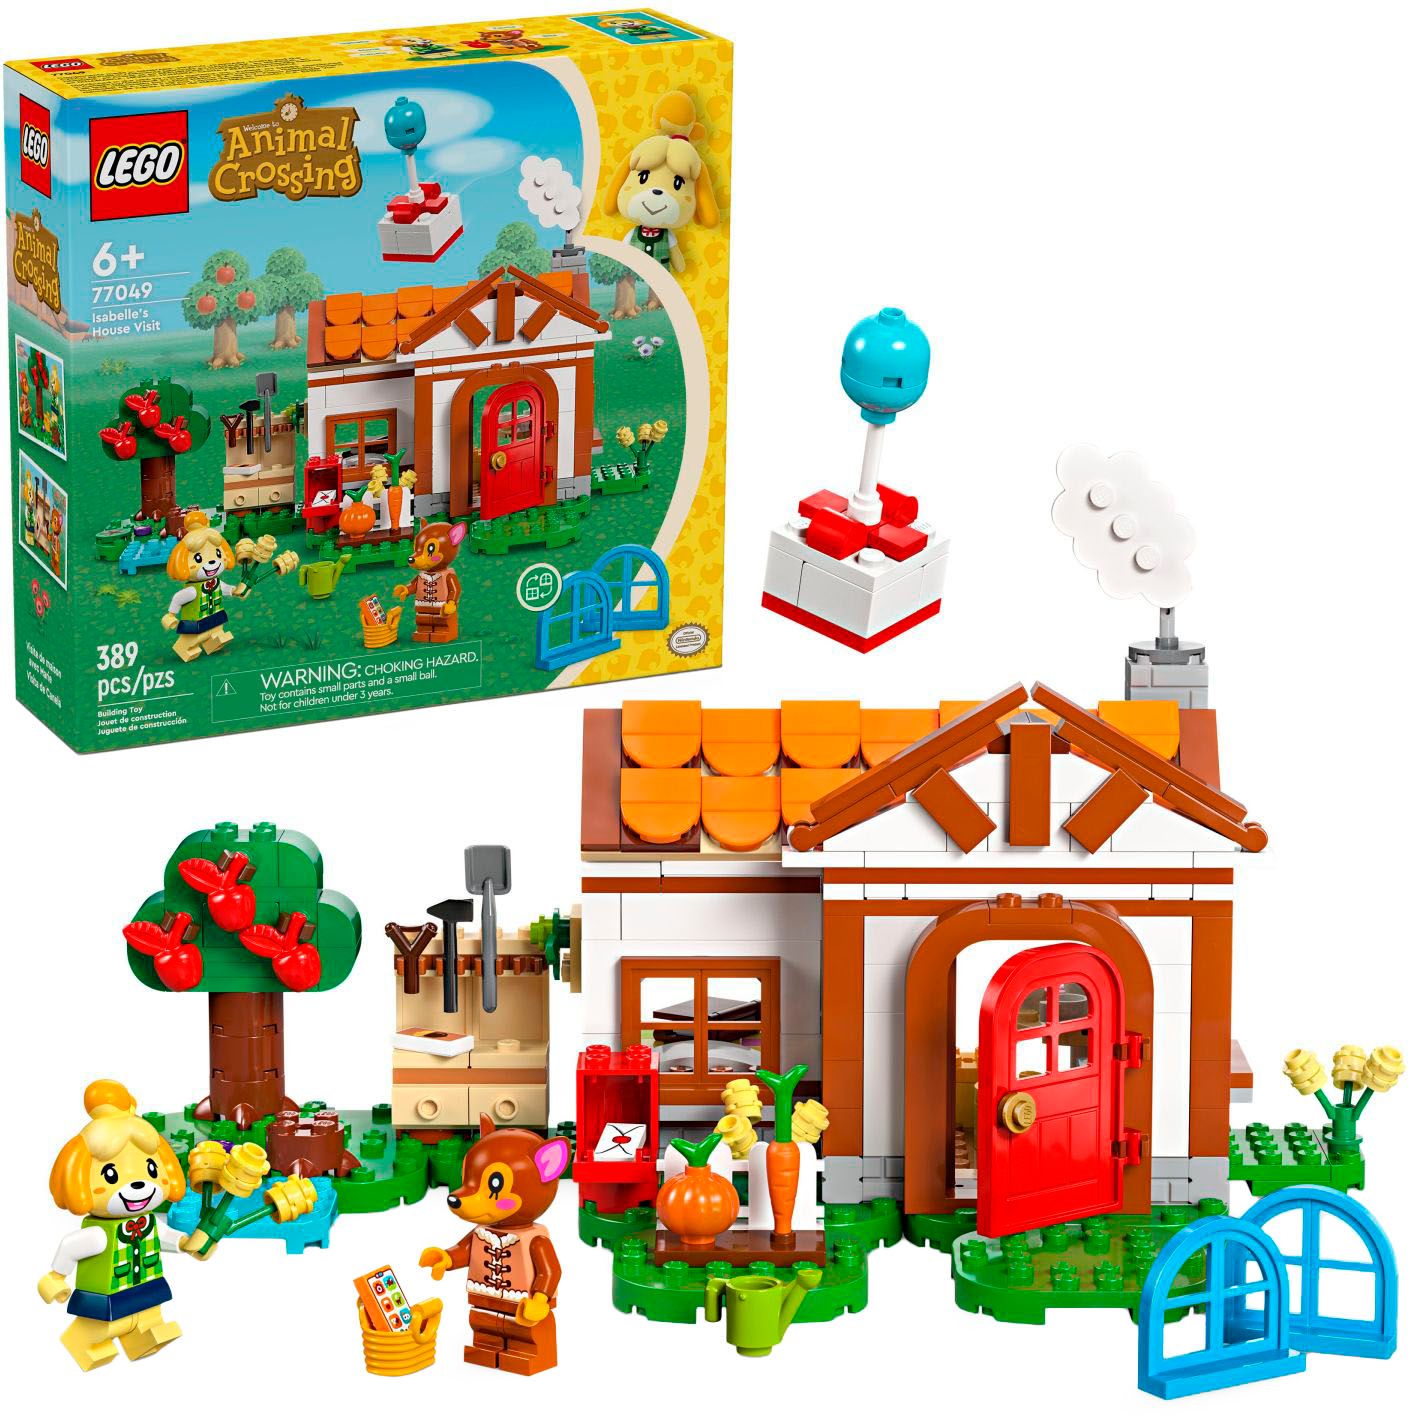 LEGO Animal Crossing Isabelle’s House Visit Video Game Toy 77049 6471349 - Best Buy | Best Buy U.S.